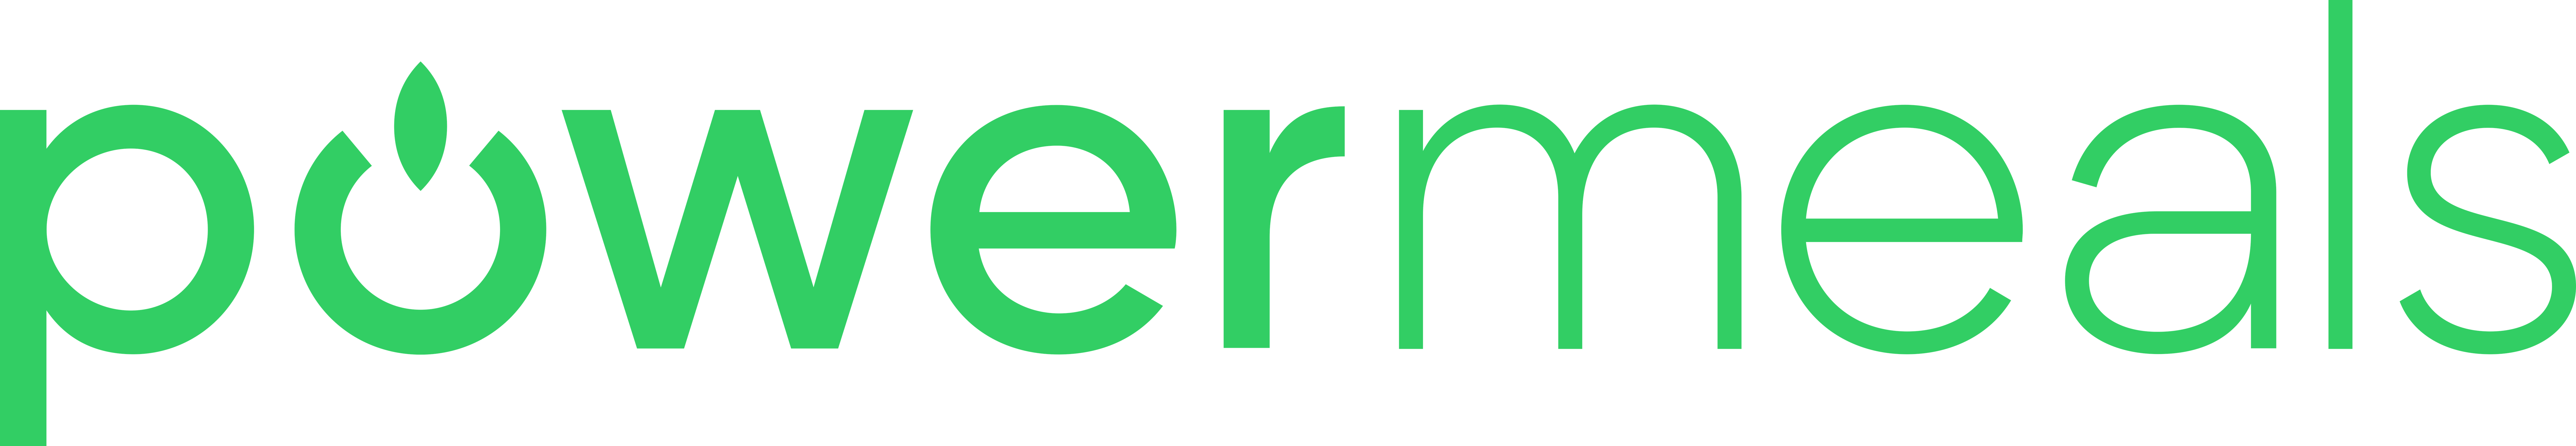 Powermeals logo in green text